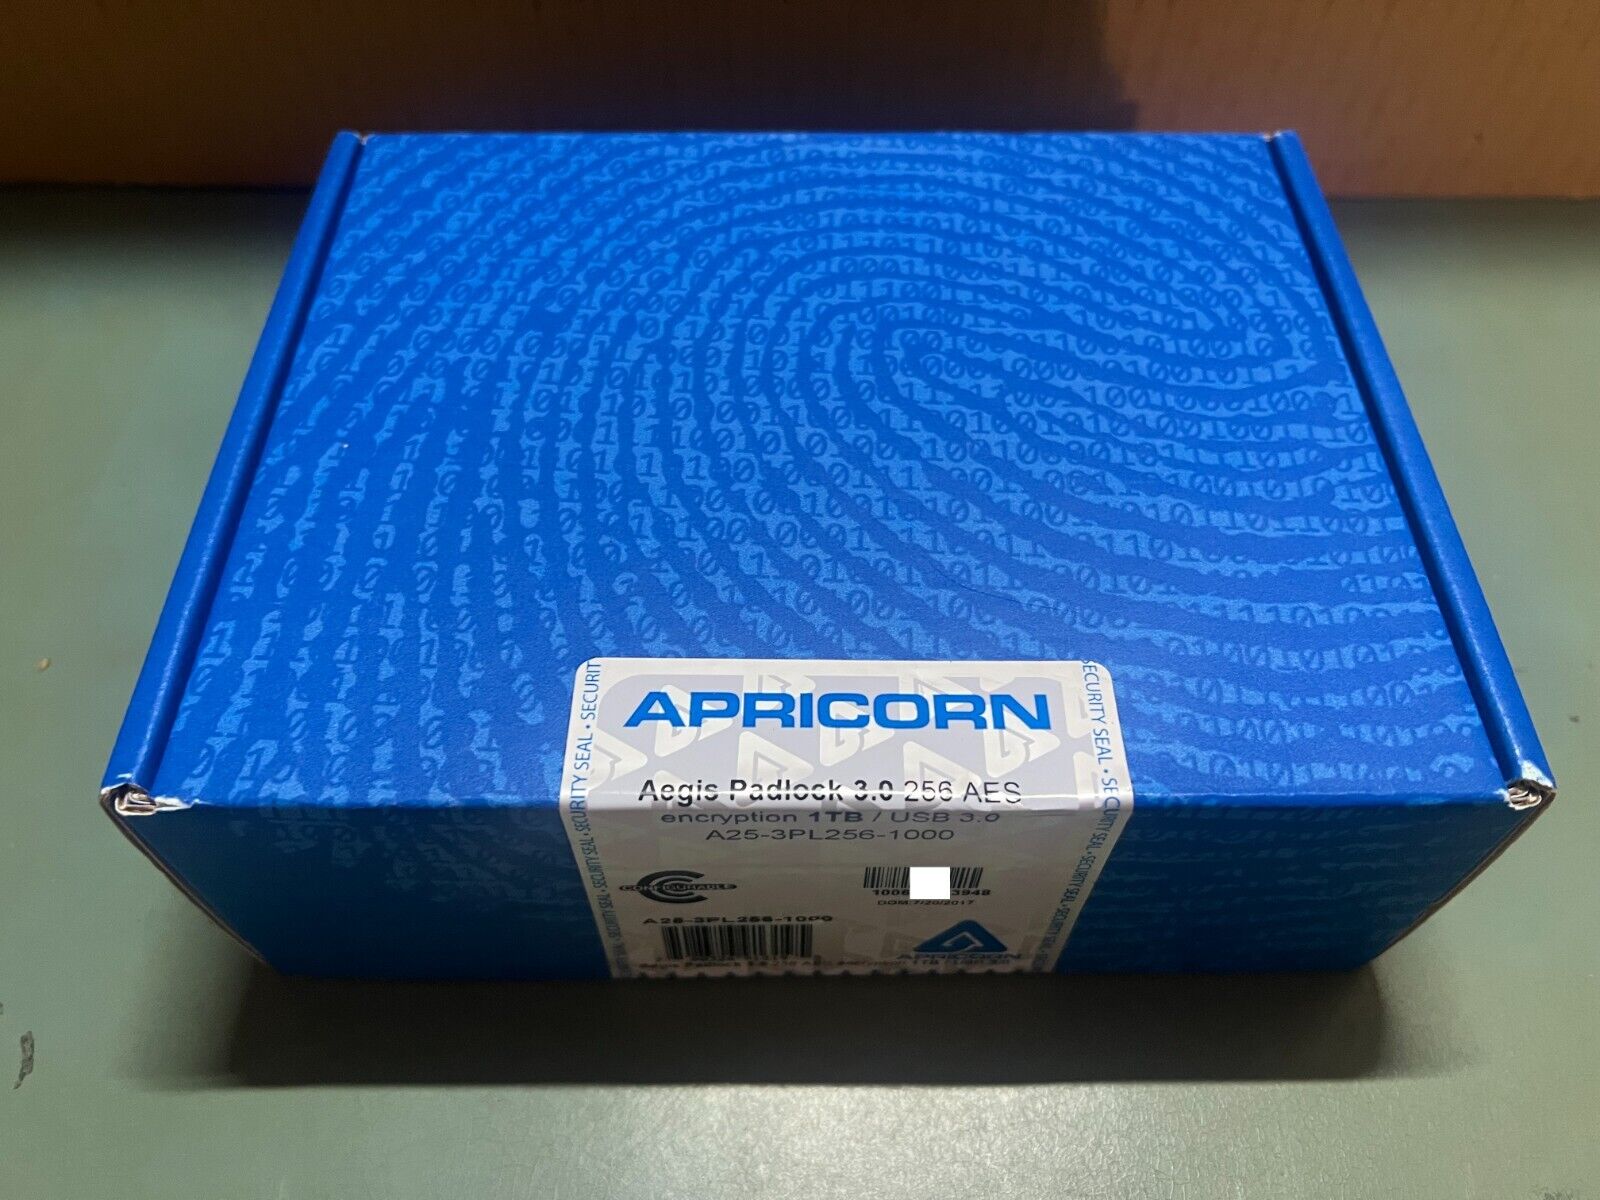 Apricorn Aegis Padlock USB 3.0 256 AES Encryption 1TB Hard Drive A25-3PL256-1000